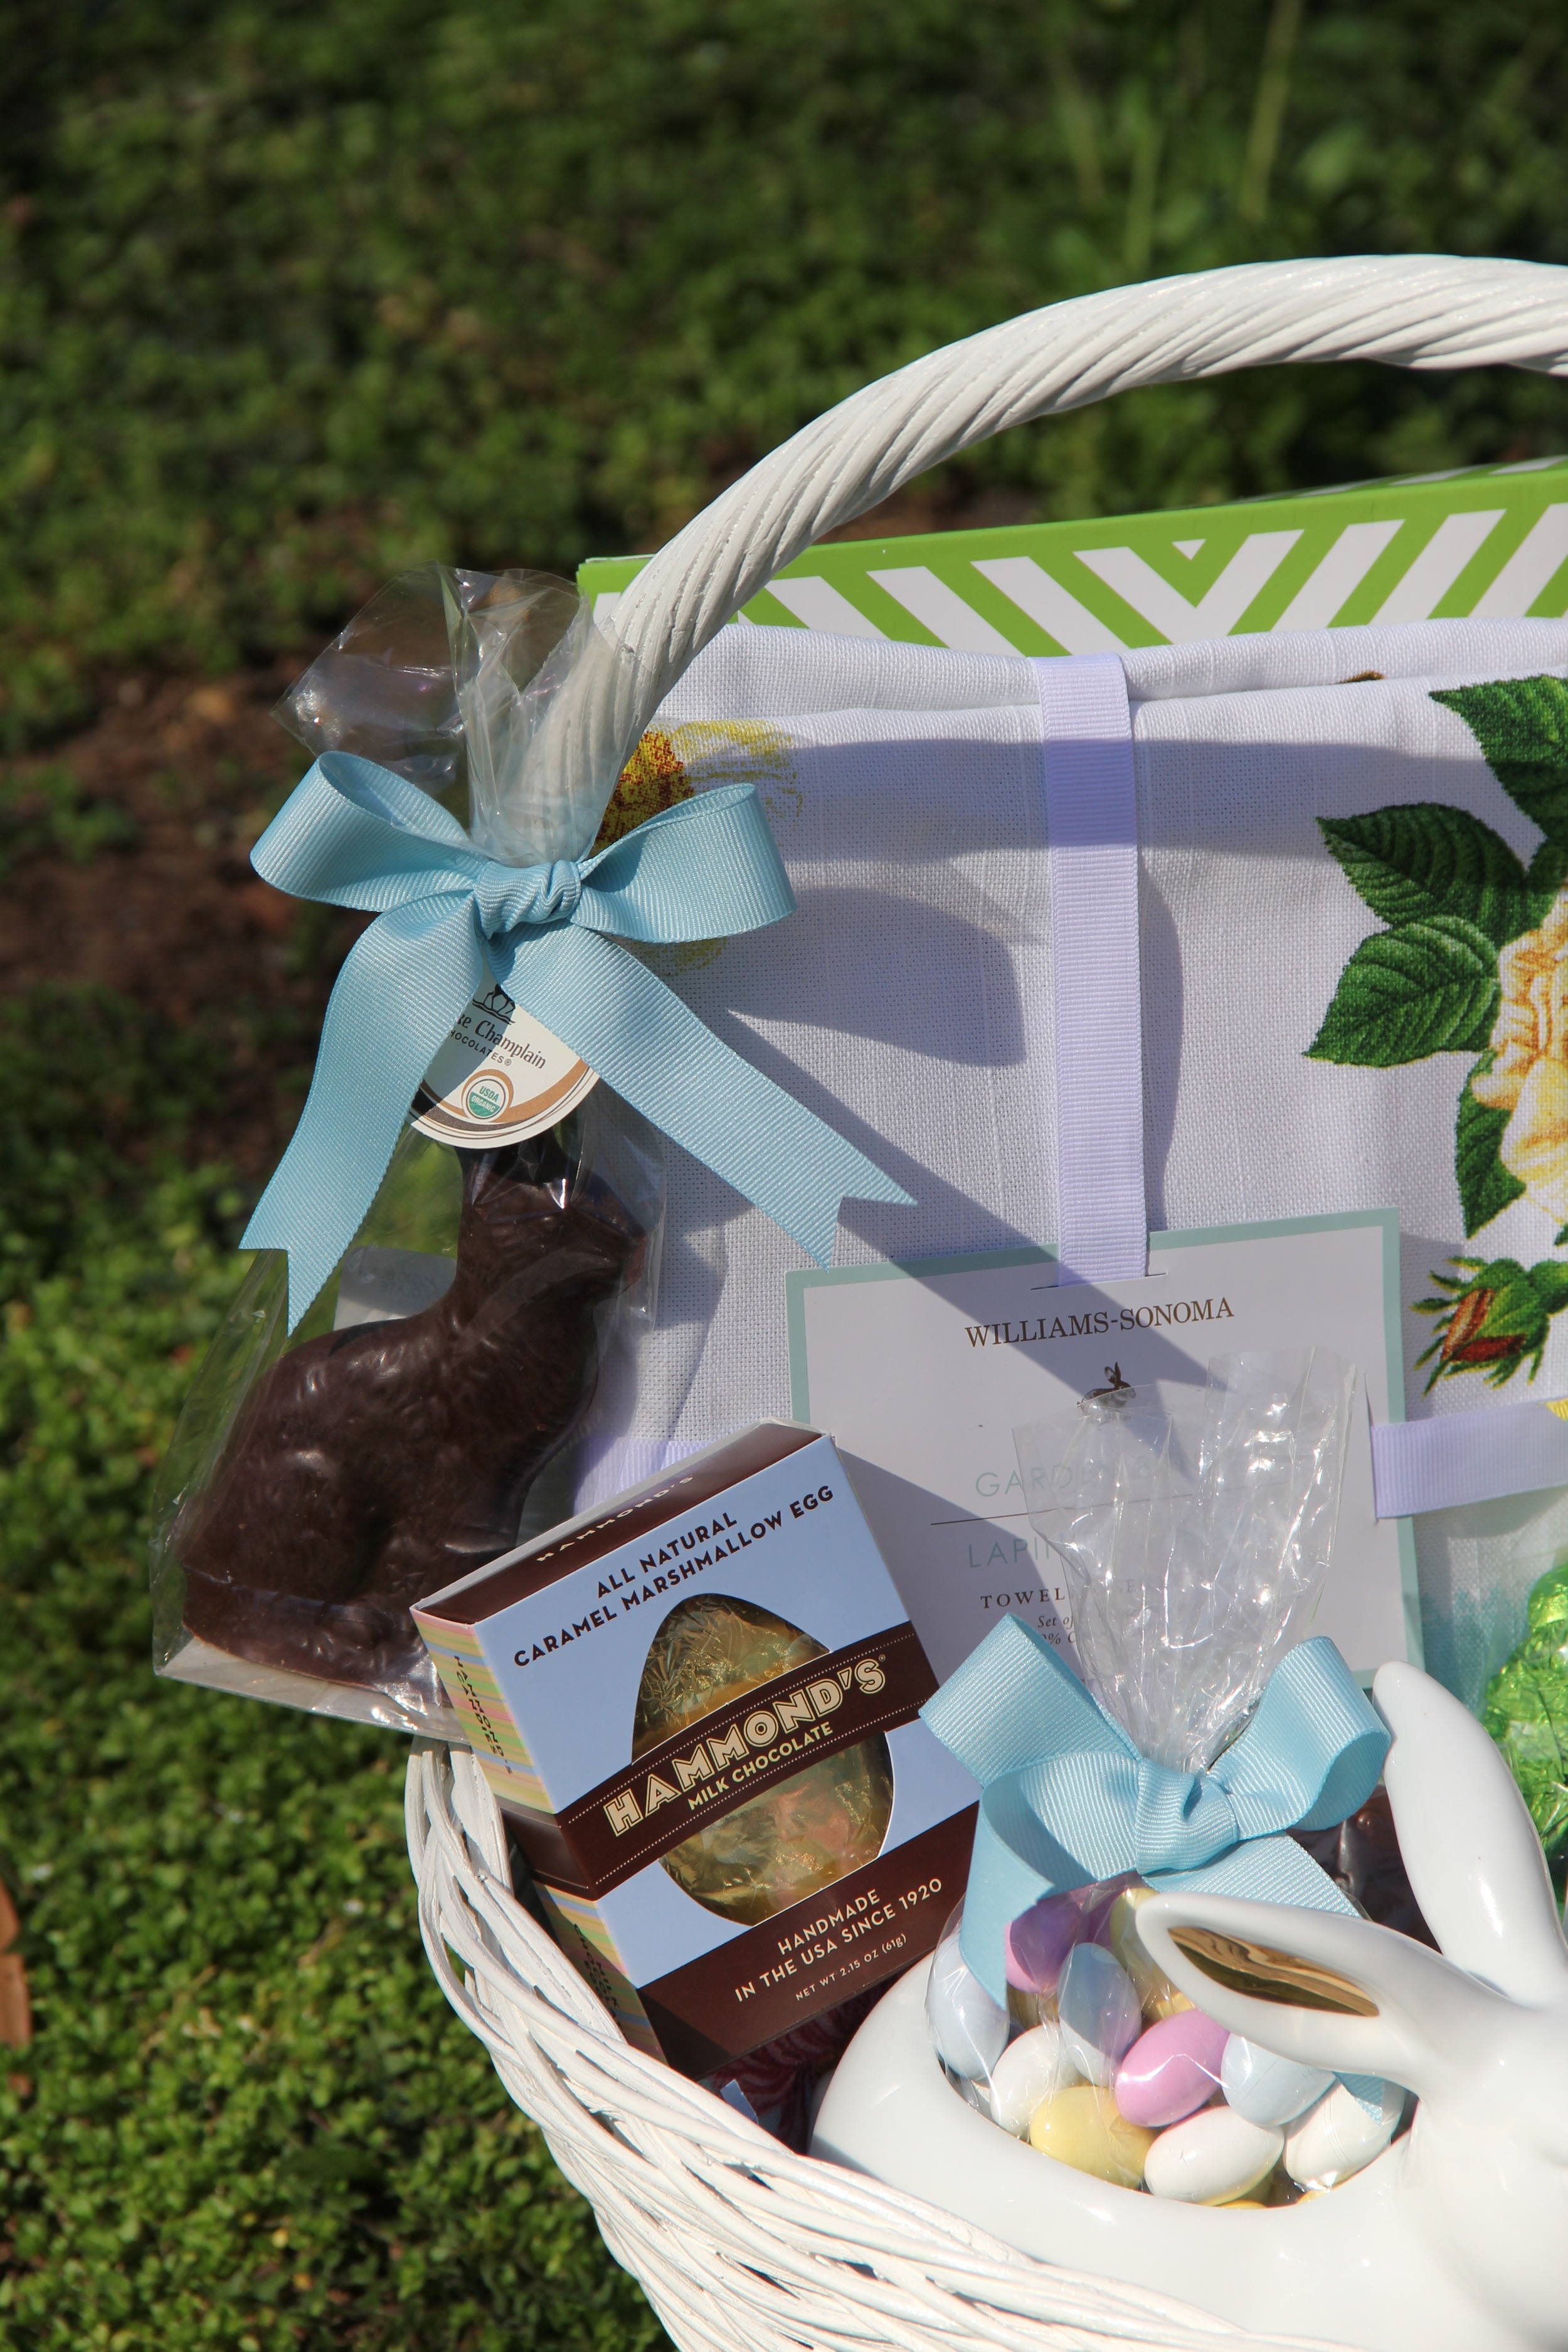 Chocolate Easter Bunny.jpg